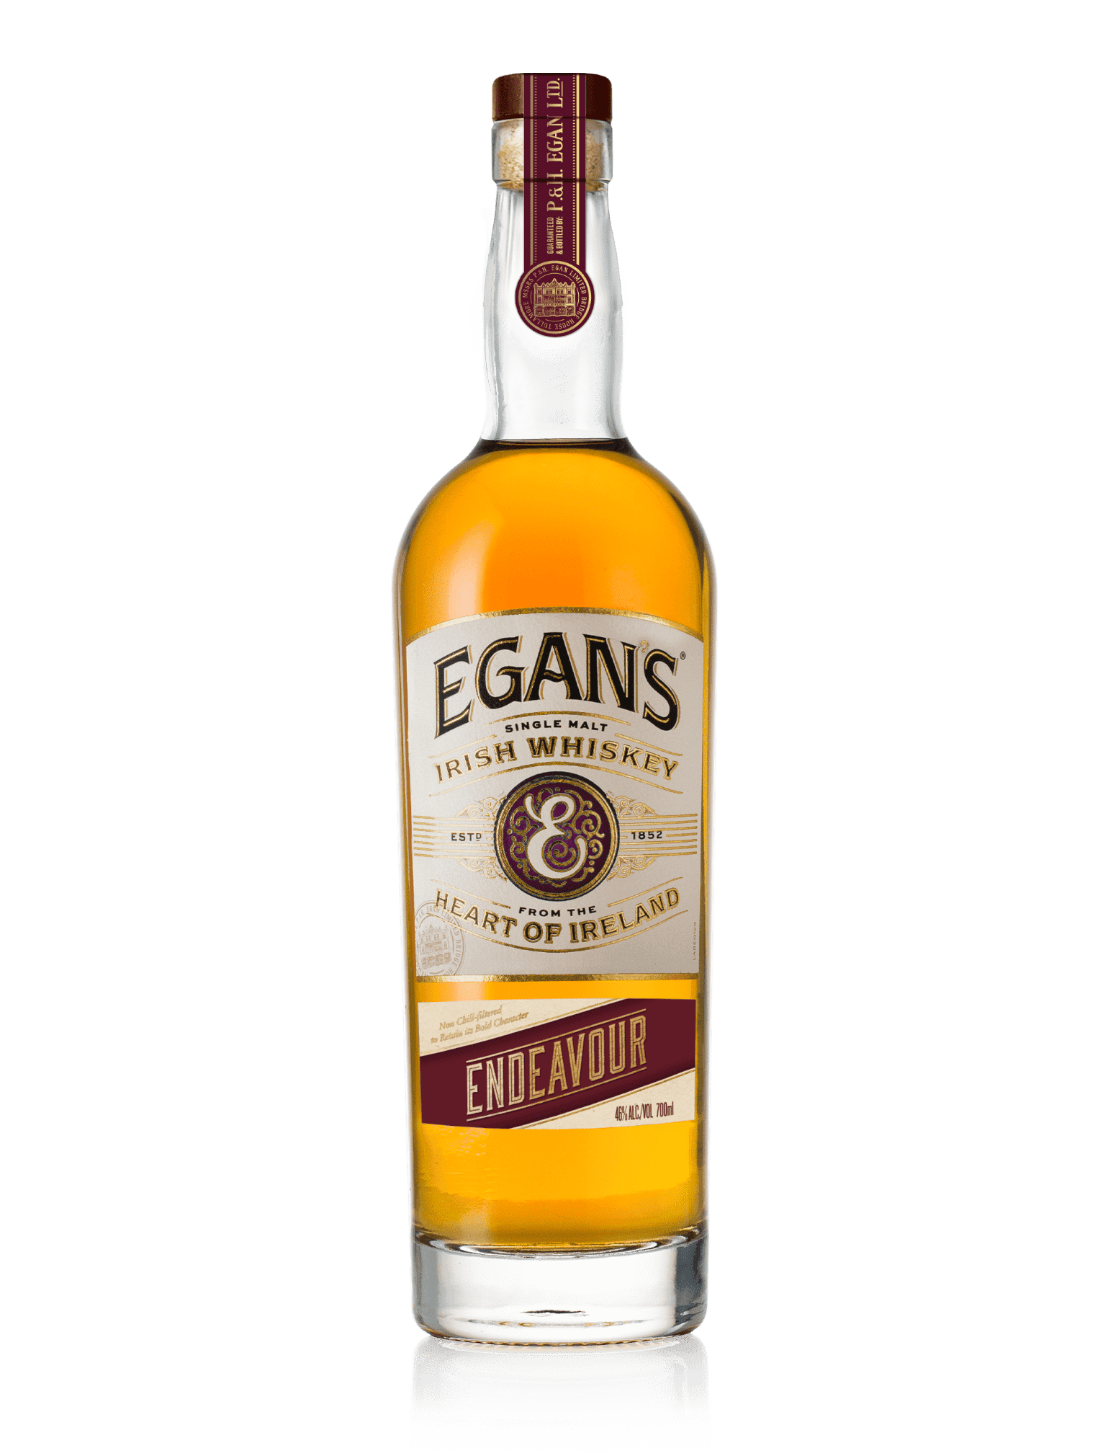 An elegant bottle of Egan's Irish Whiskey Endeavour in front of a plain white background